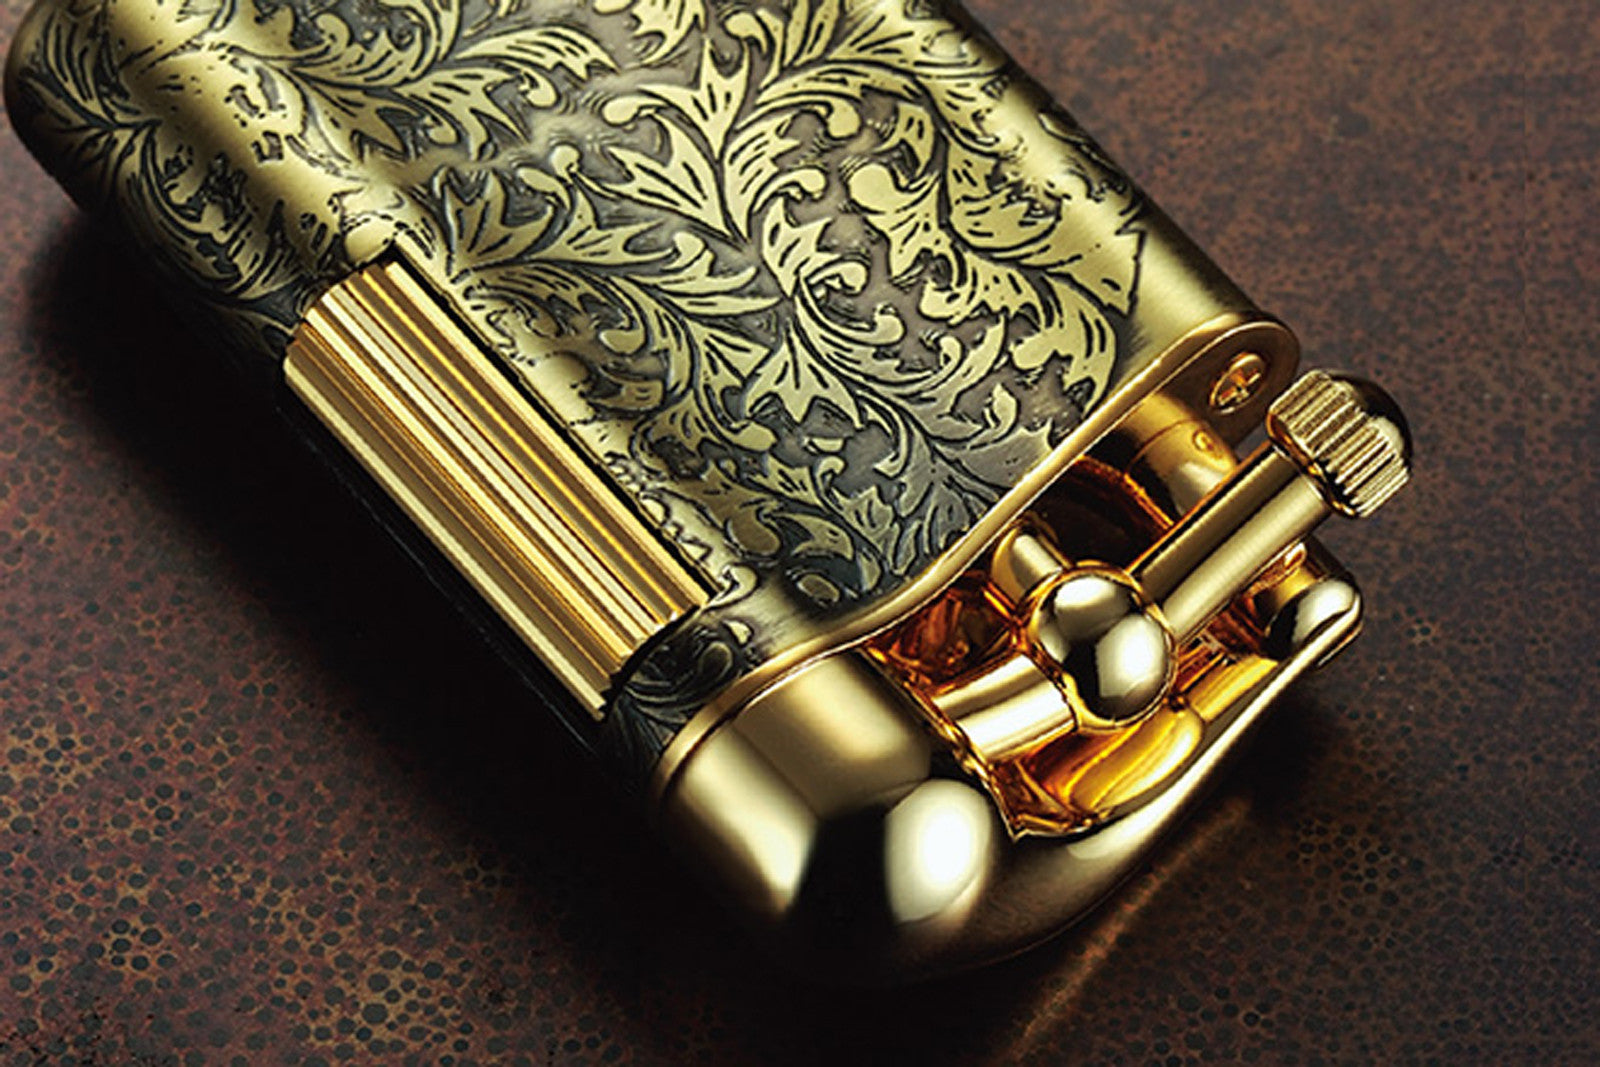 Sarome Flint Cigarette Lighter SD12-29 Antique silver arabesque / Rose gold